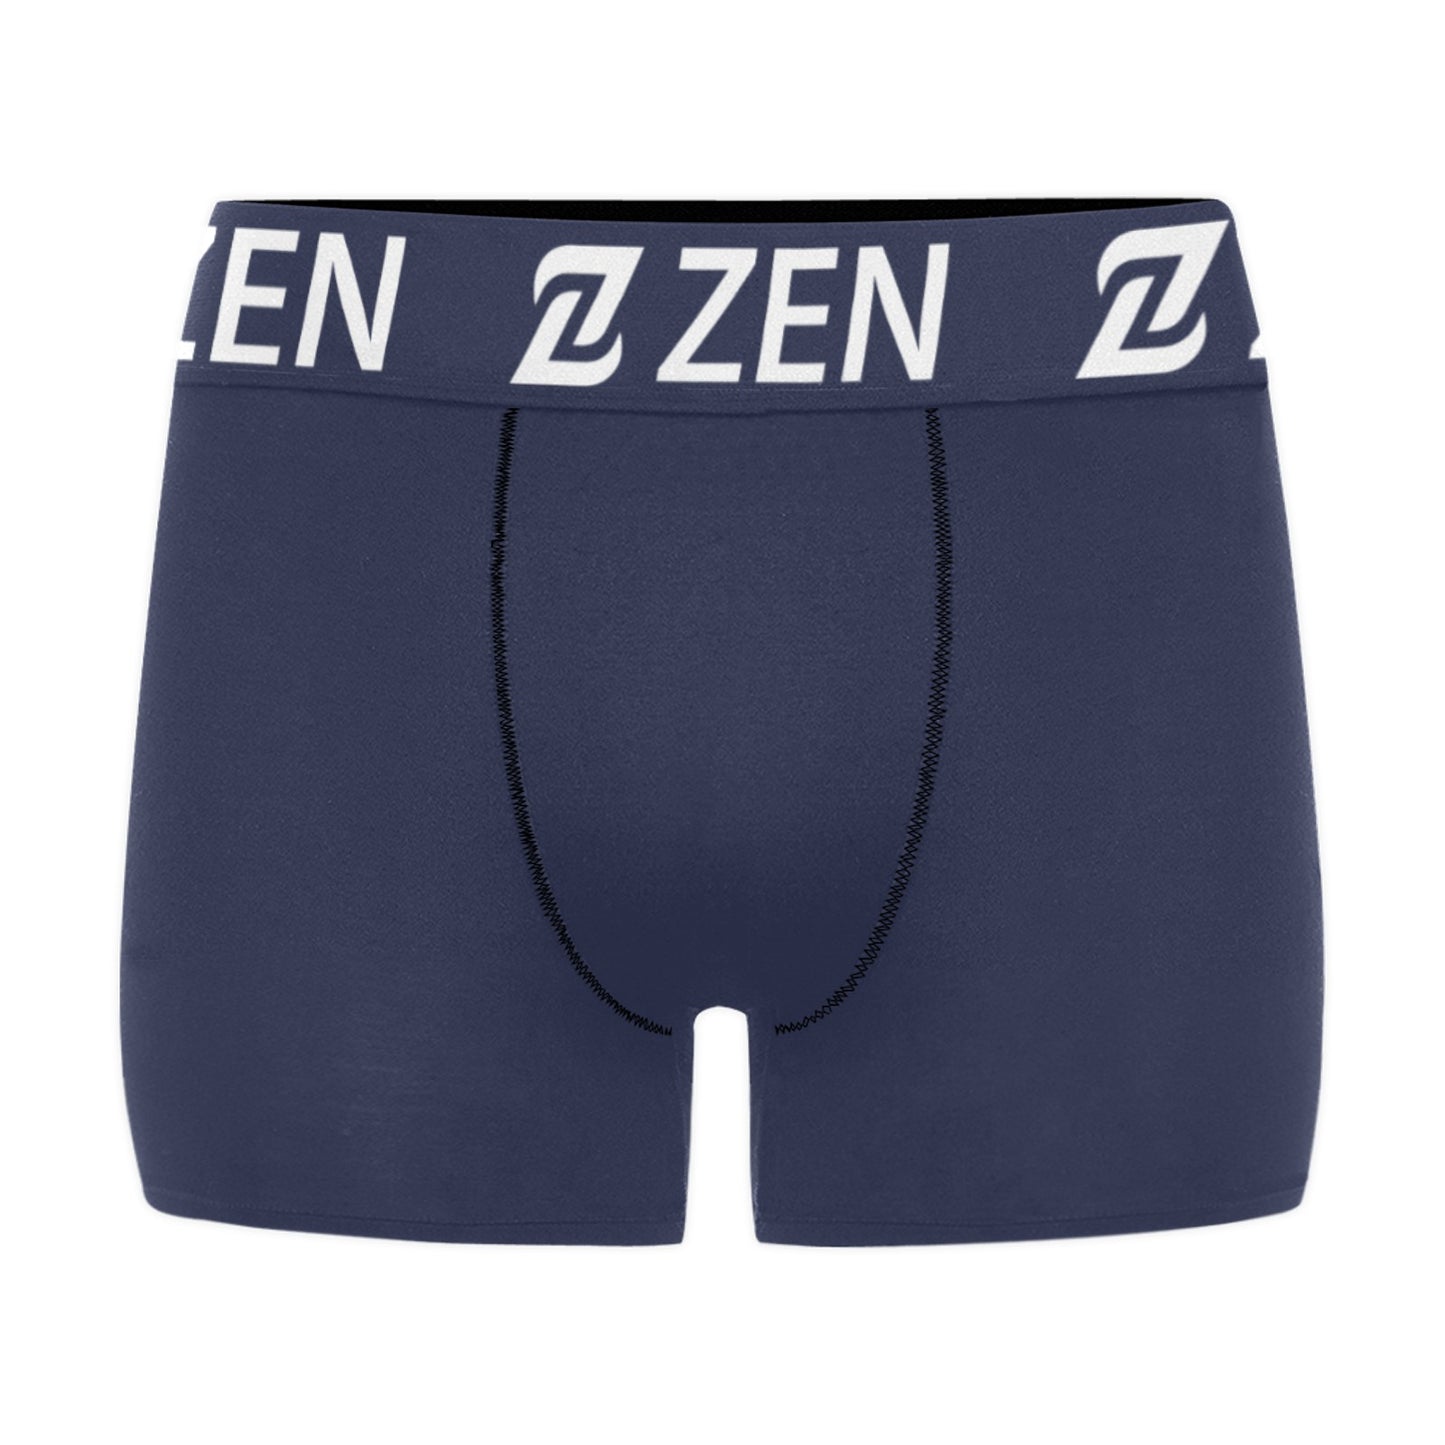 Zen Waistband - Zen Navy